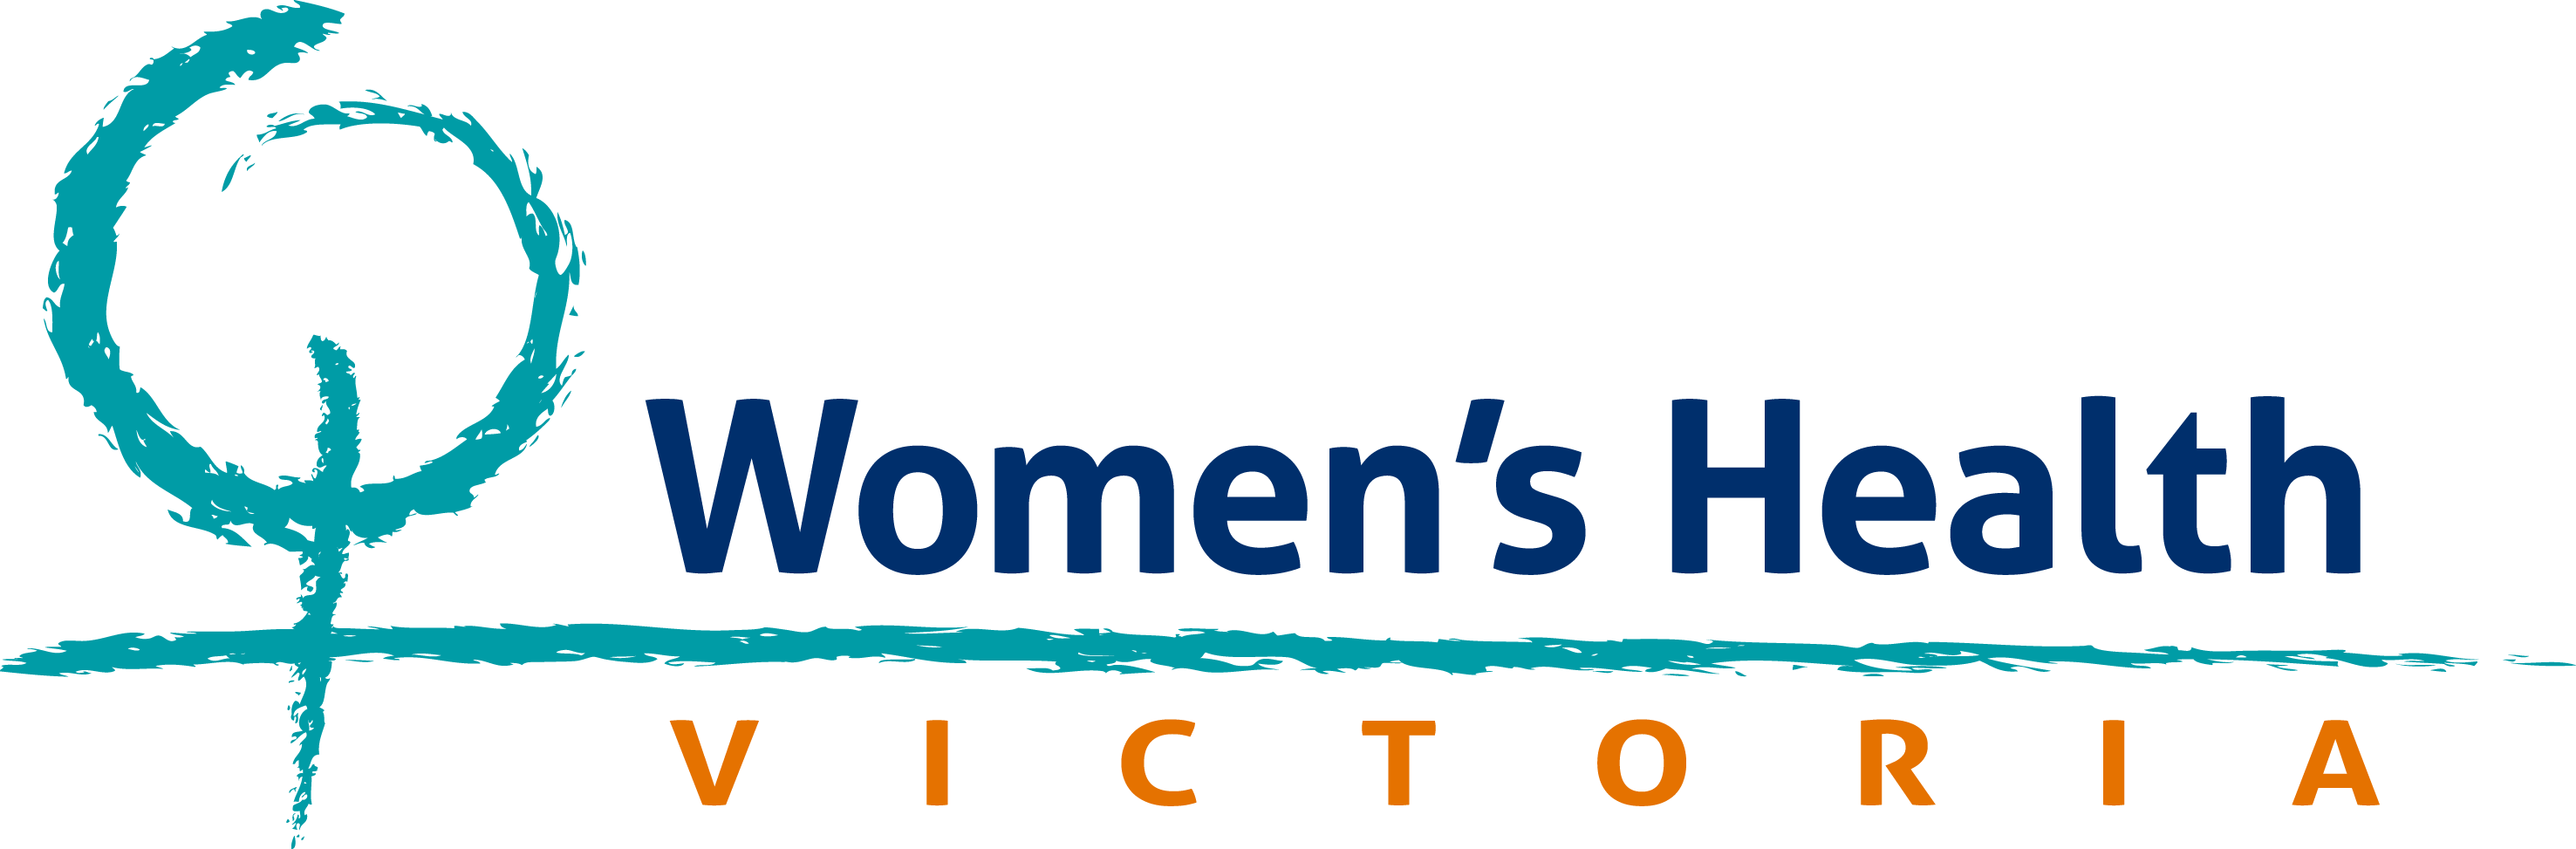 Image of Womens Health Victoria logo